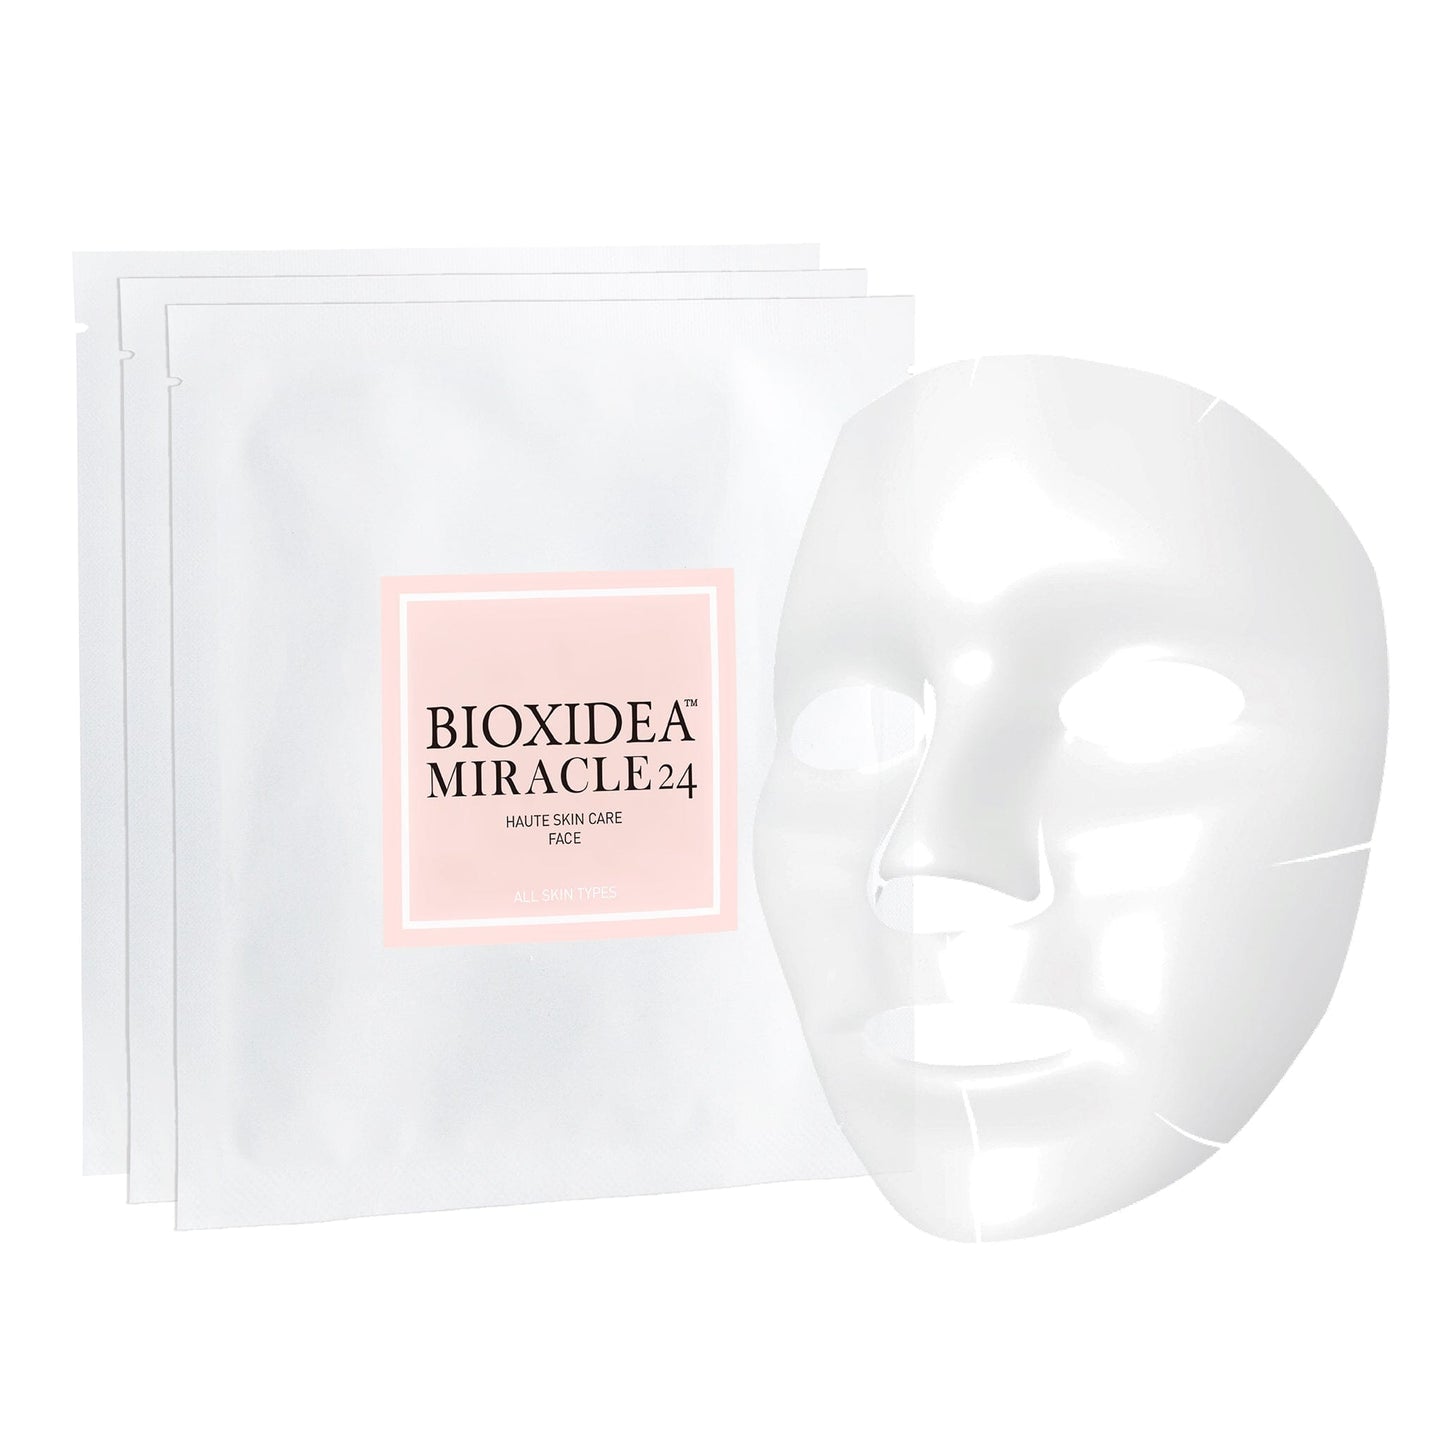 BIOXIDEA Miracle24 Face Mask Mask 